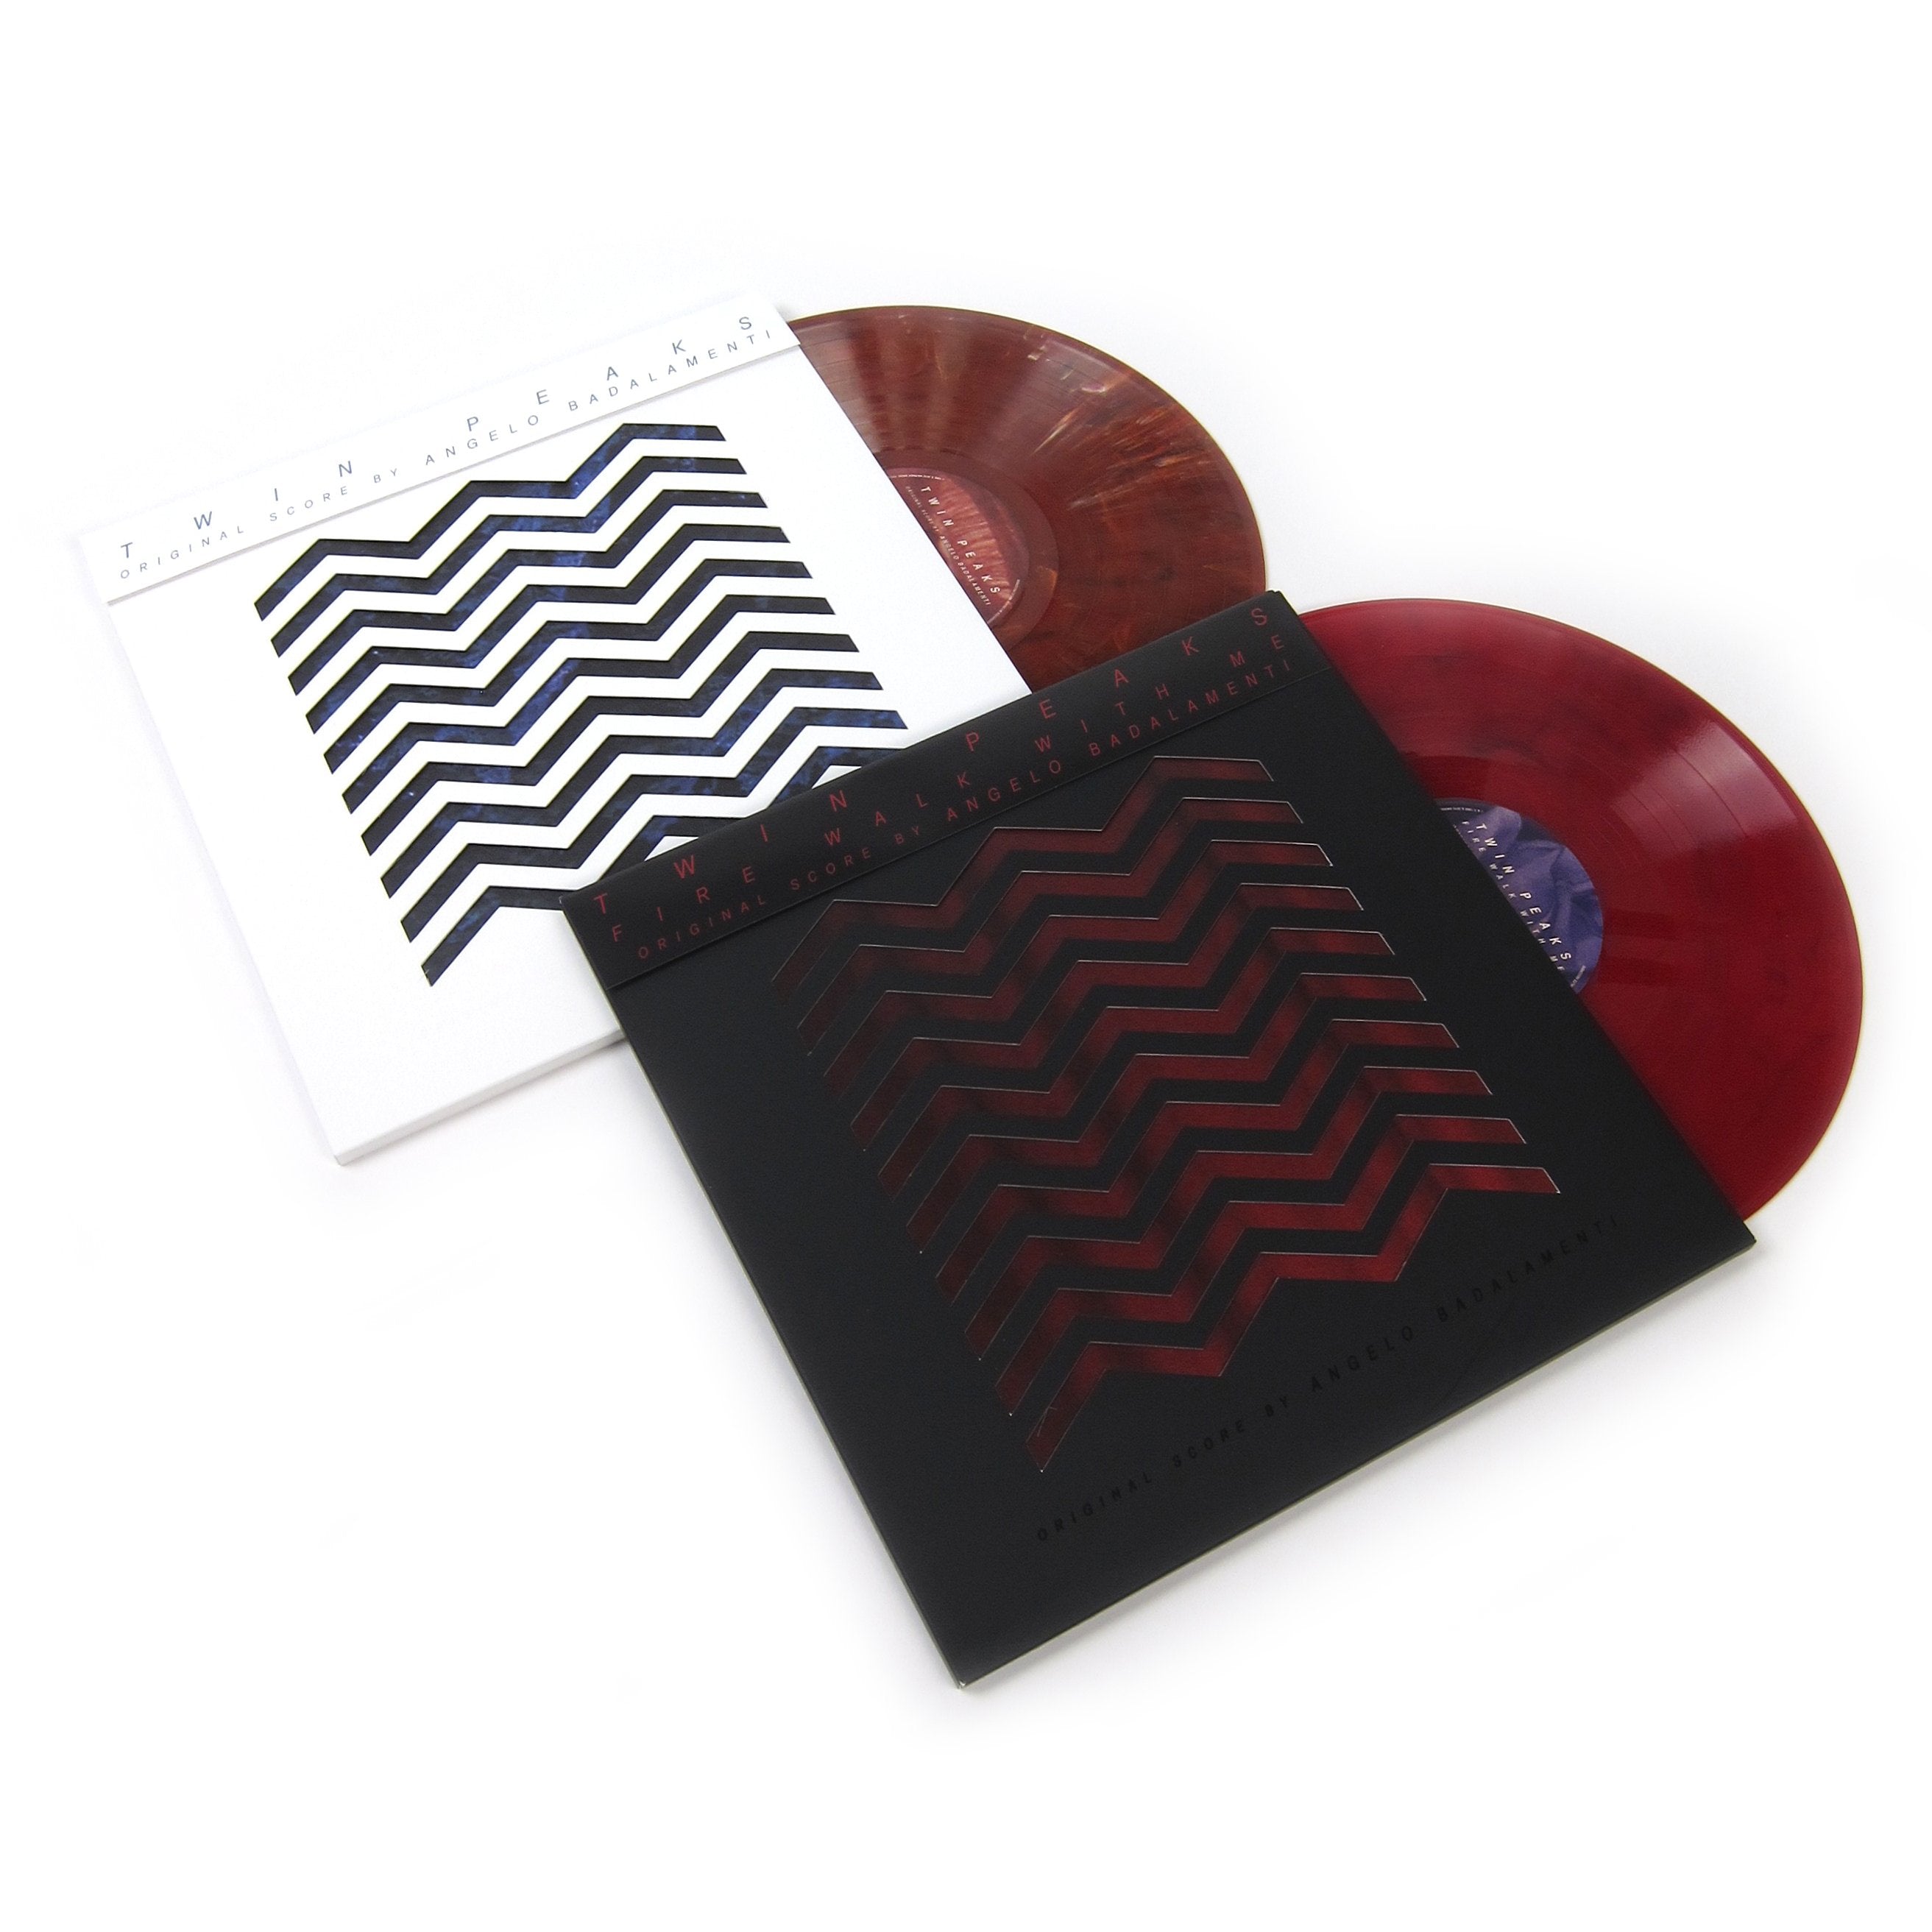 Angelo Badalamenti: Twin Peaks Soundtrack 180g Colored Vinyl LP Album Pack (Twin Peaks, Fire Walk With Me)